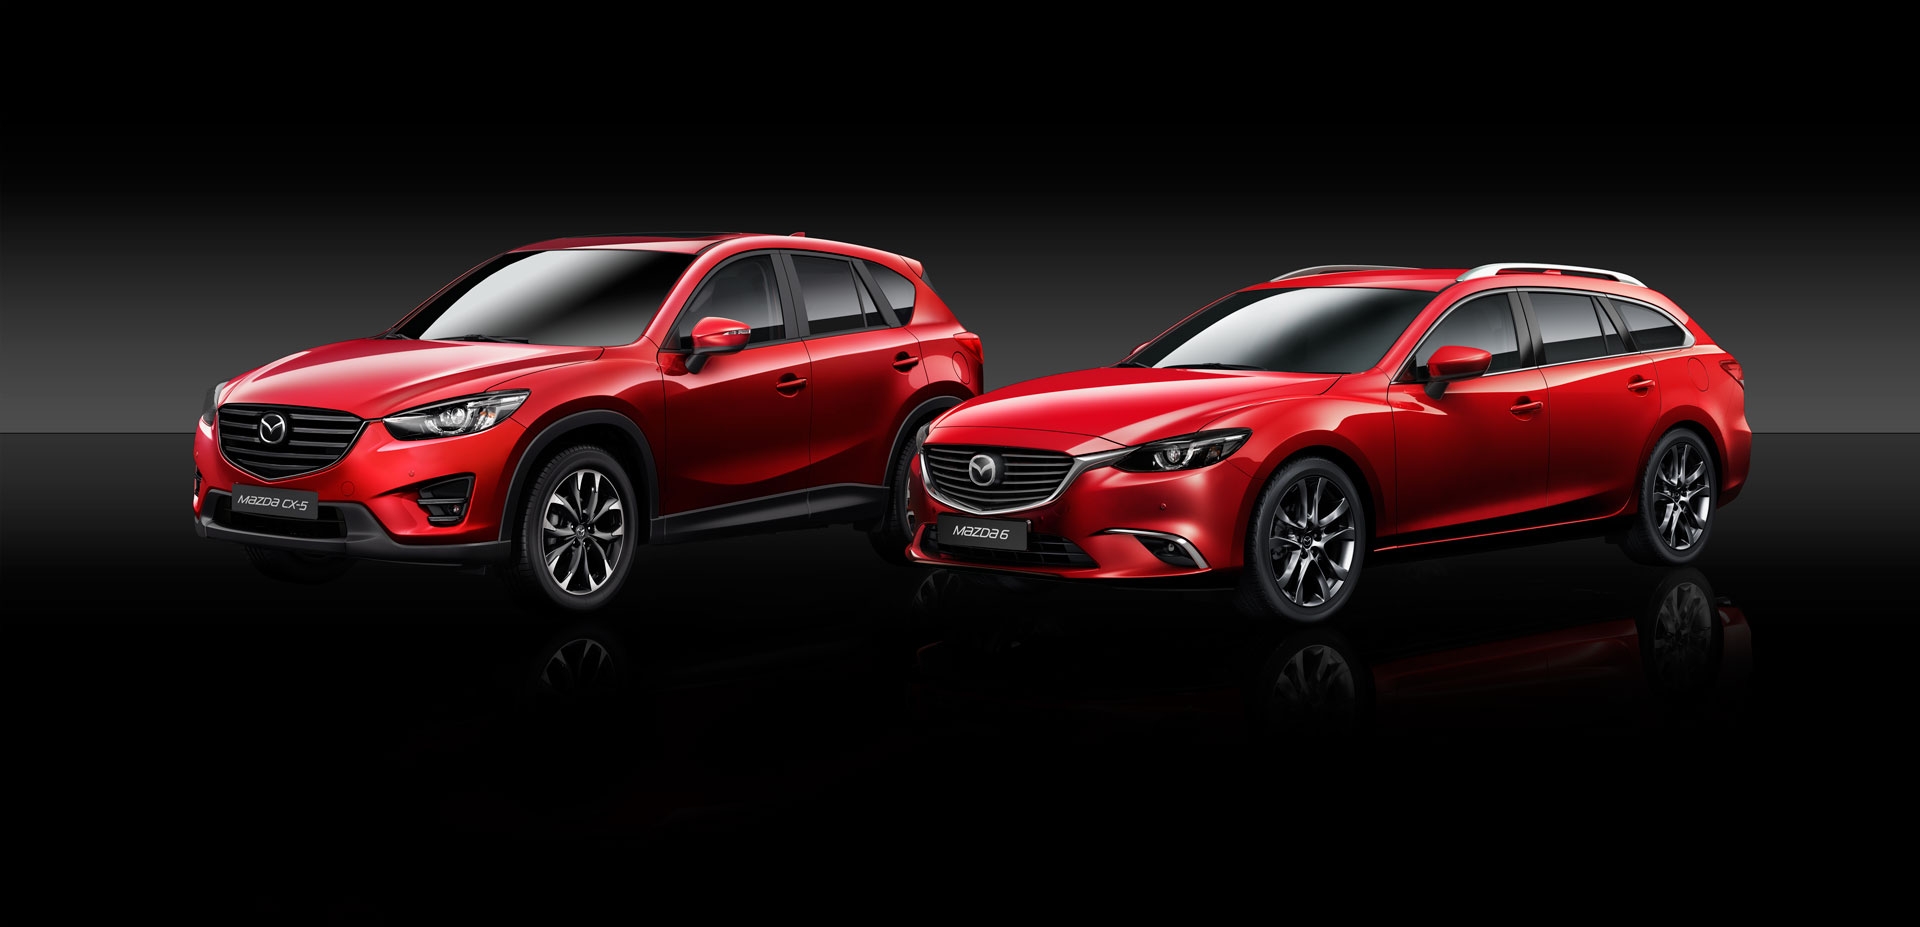 2015_CX-5_Mazda6_launch__jpg300